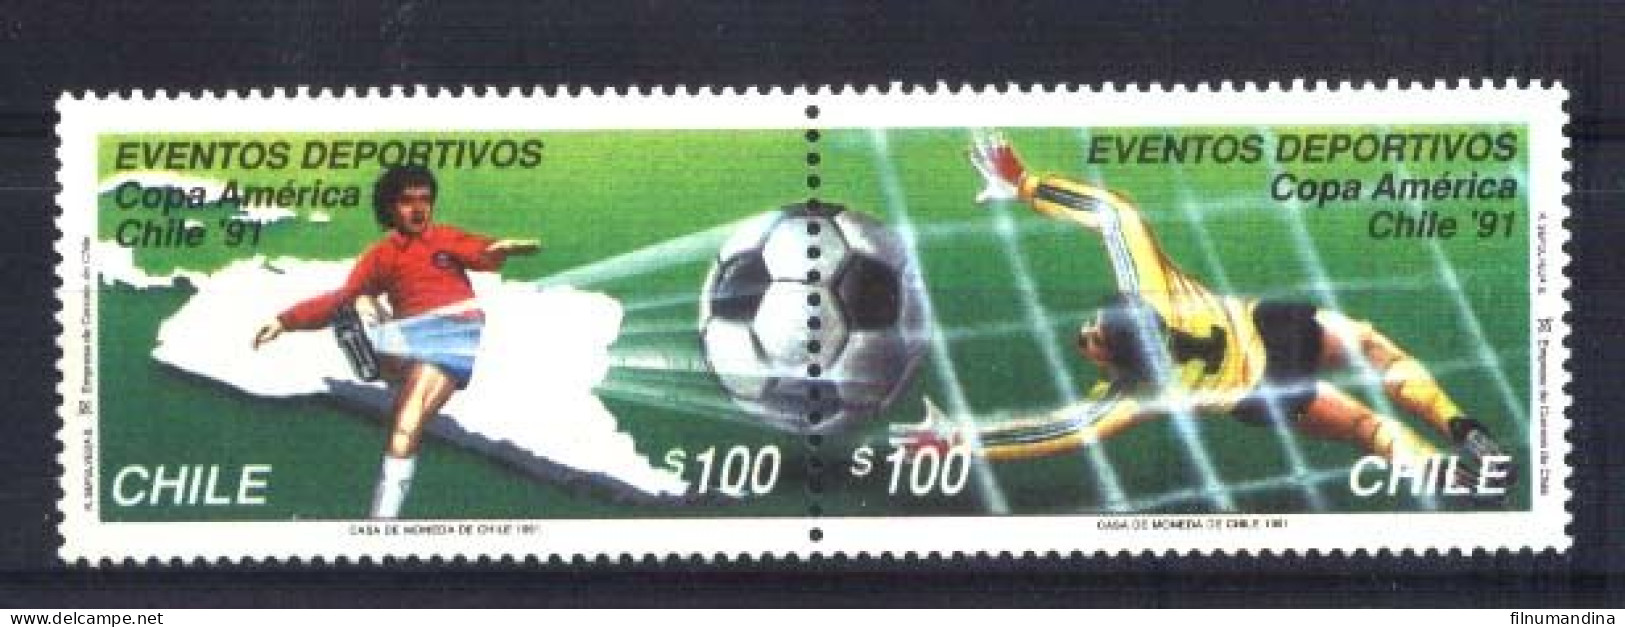 #2599 CHILE 1991 FOOTBALL FUTBOL SOCCER AMERICA CUP YV 1028-9 PAIR MNH - Copa America